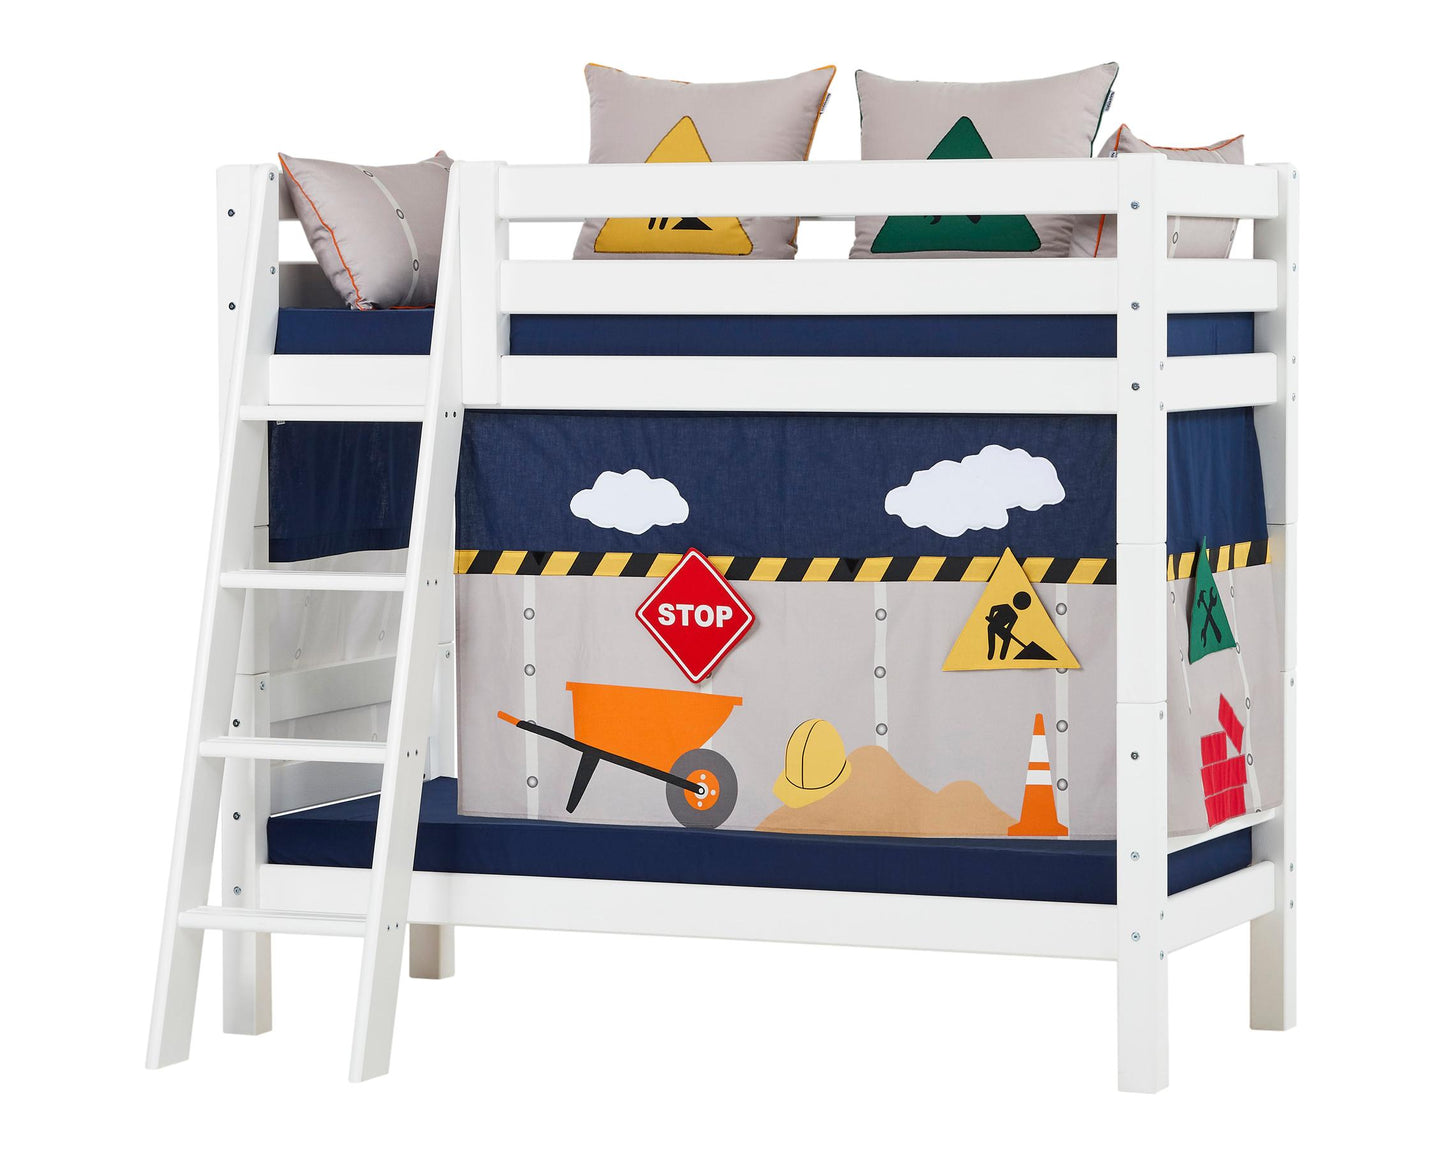 ECO Luxury - Bunk bed with slant ladder - 70x160 cm - white